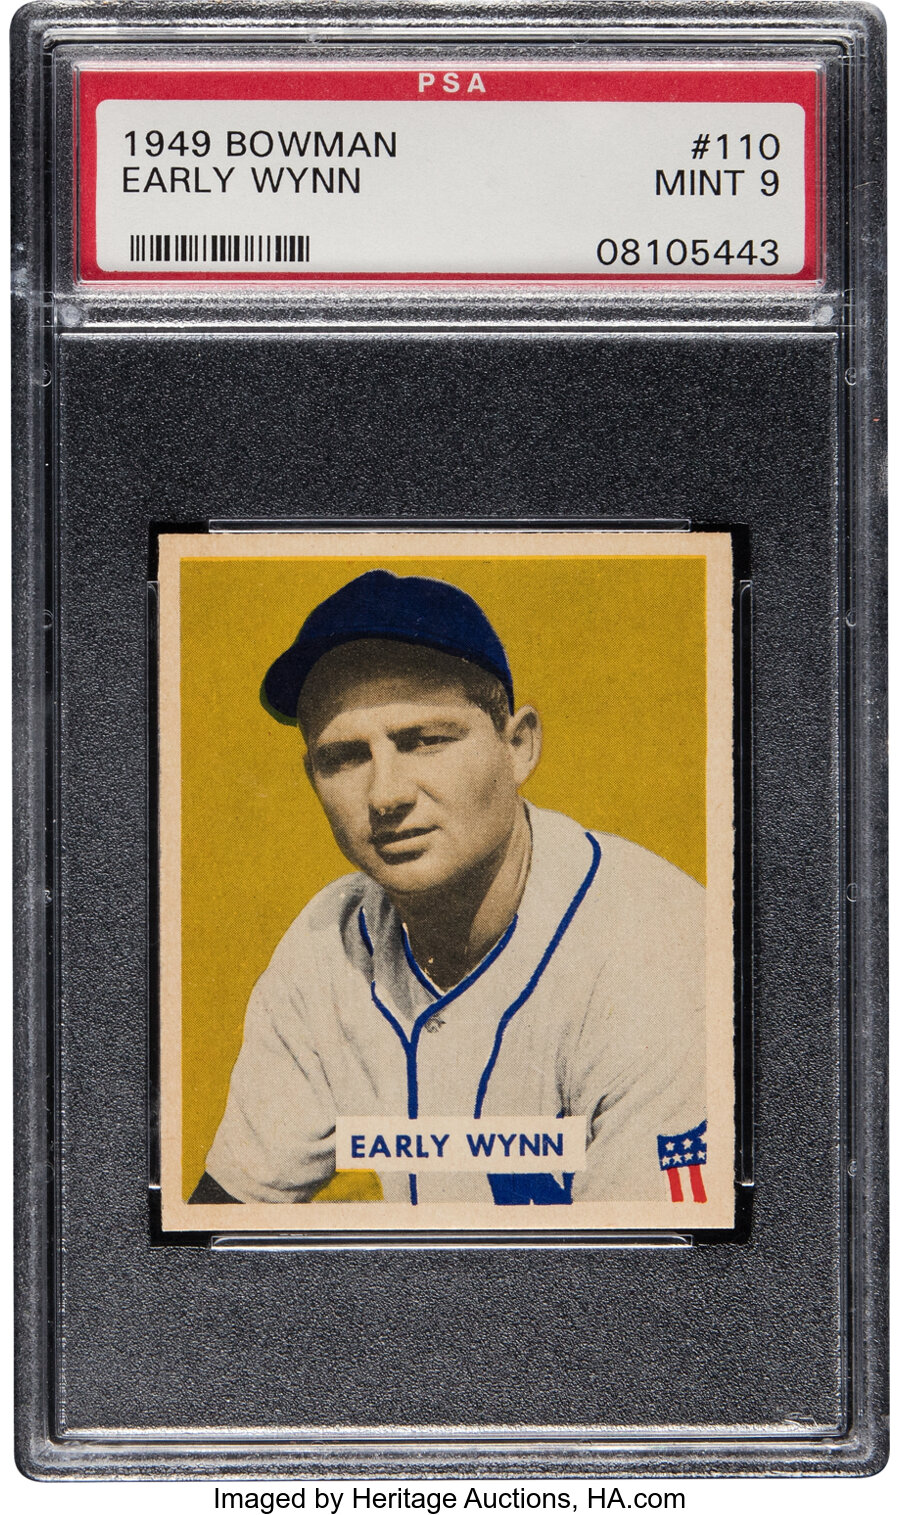 1949 Bowman Early Wynn Rookie #110 PSA Mint 9 - None Higher